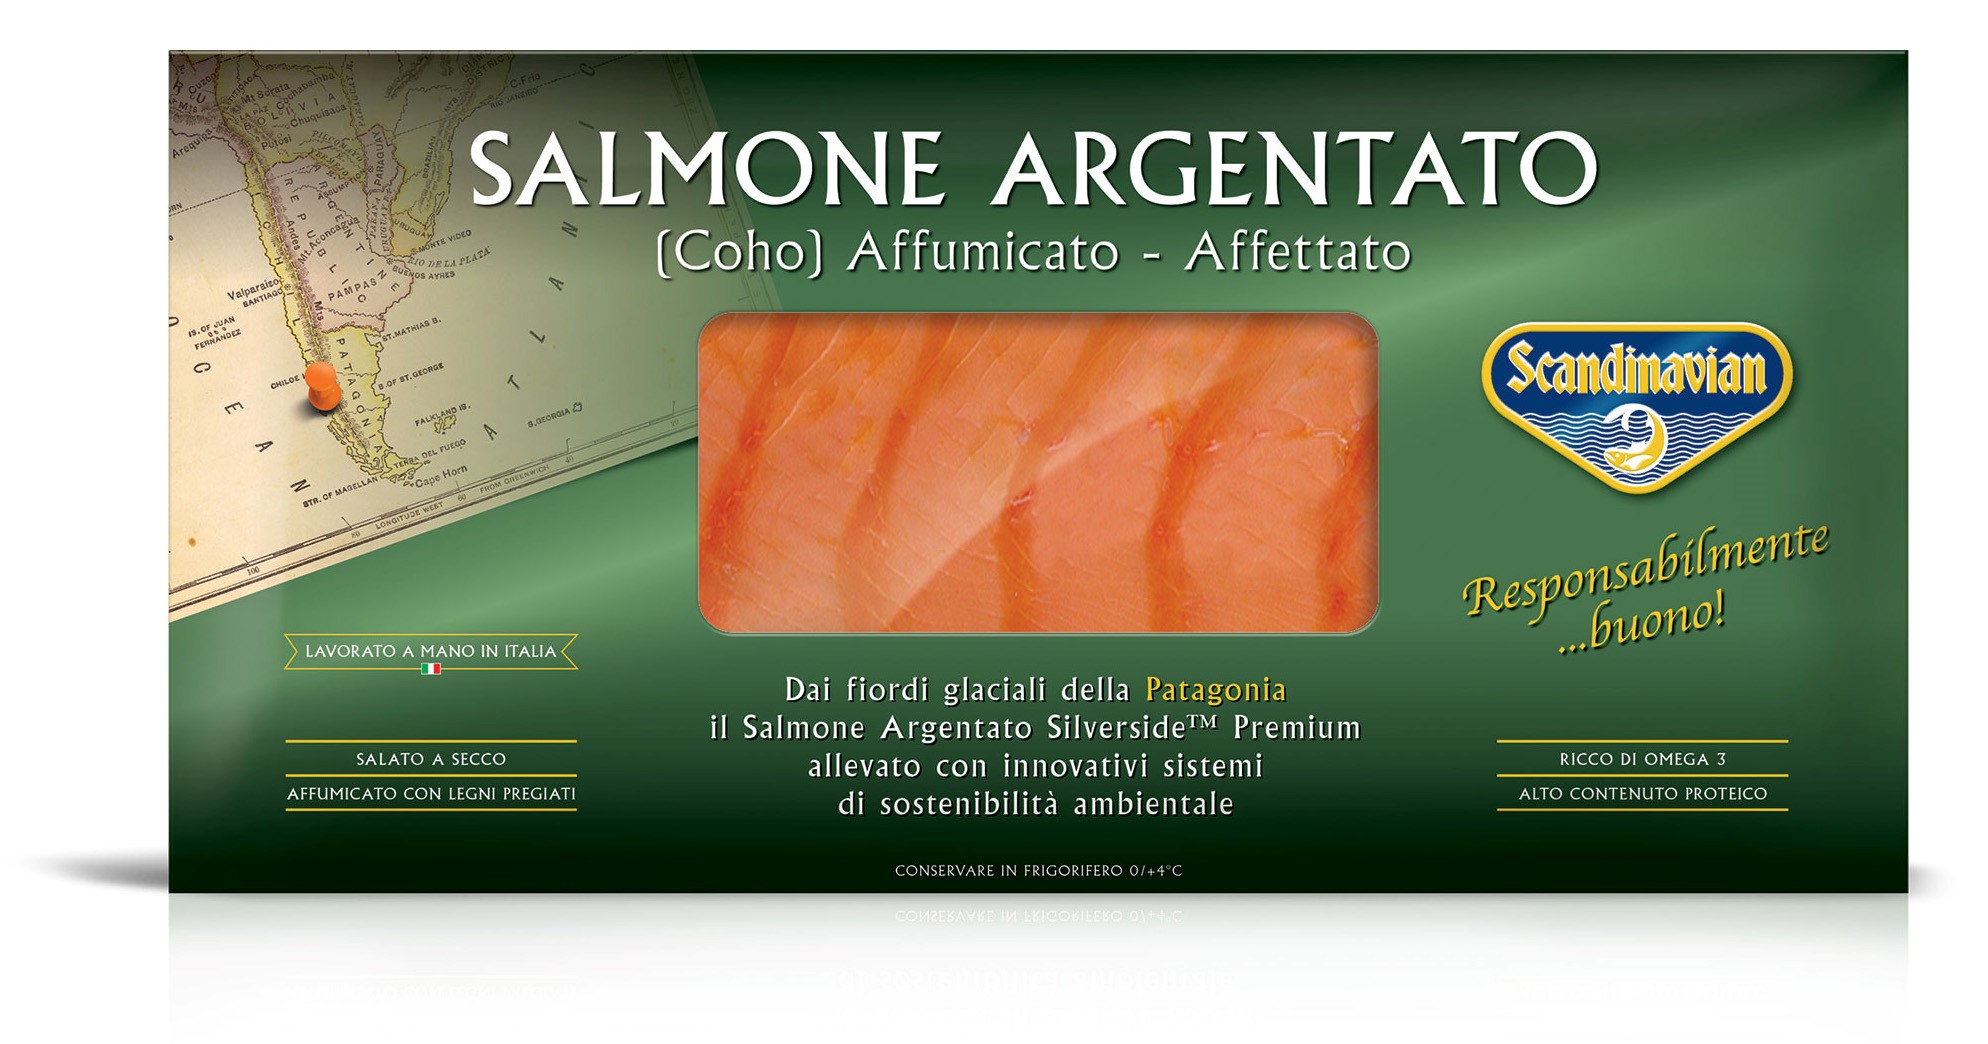 Salmone Argentato allevato Patagonia aff. affettato busta 200 g sv.